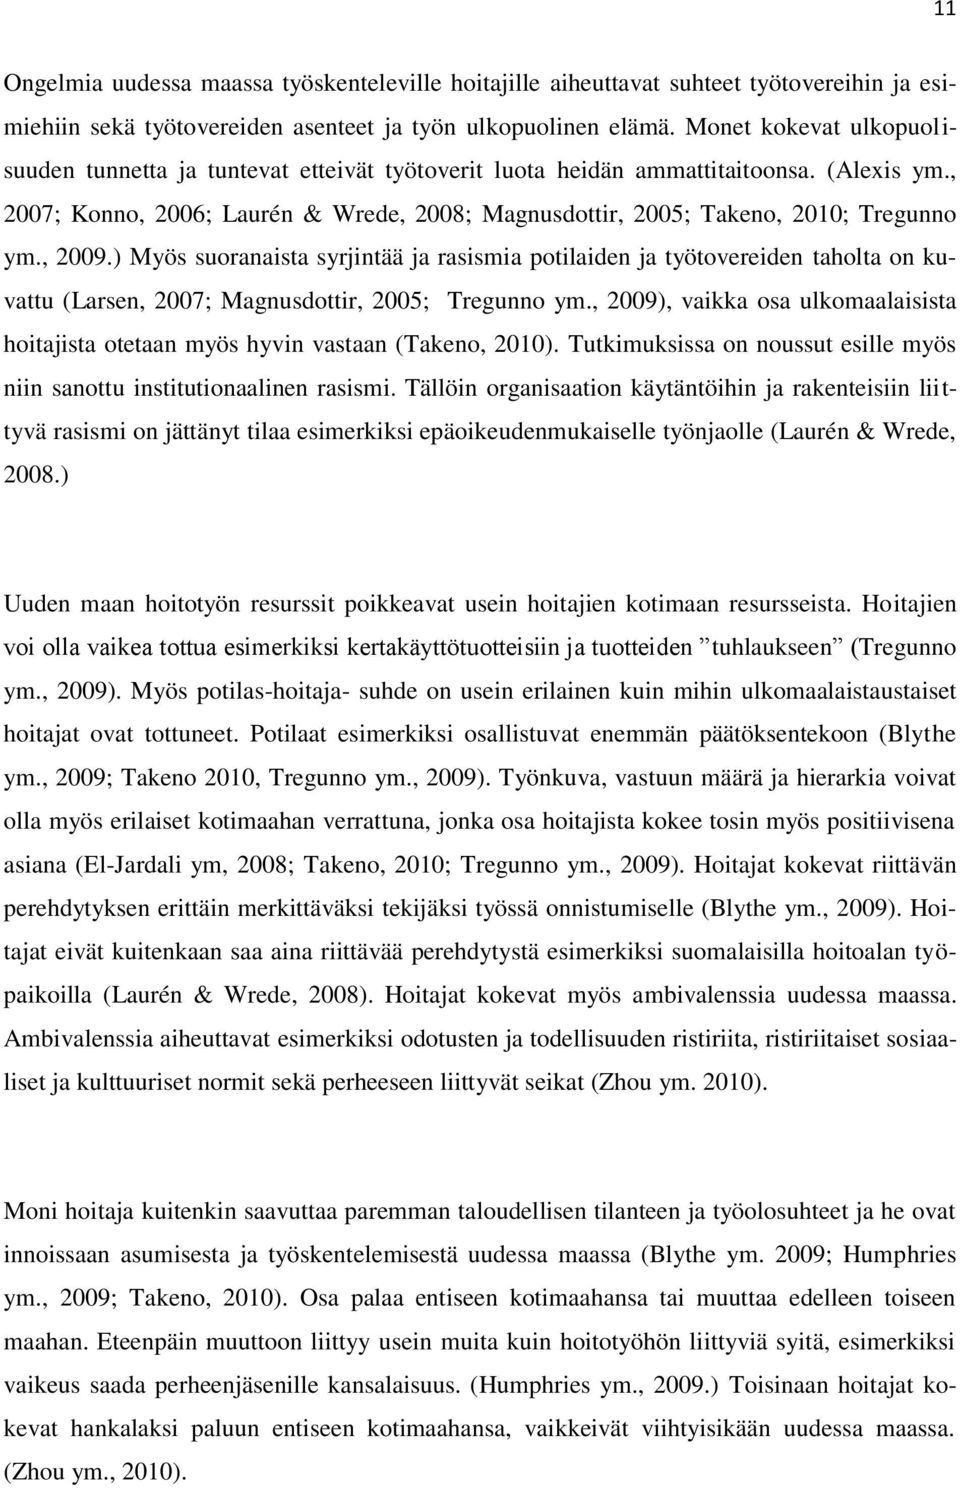 , 2007; Konno, 2006; Laurén & Wrede, 2008; Magnusdottir, 2005; Takeno, 2010; Tregunno ym., 2009.